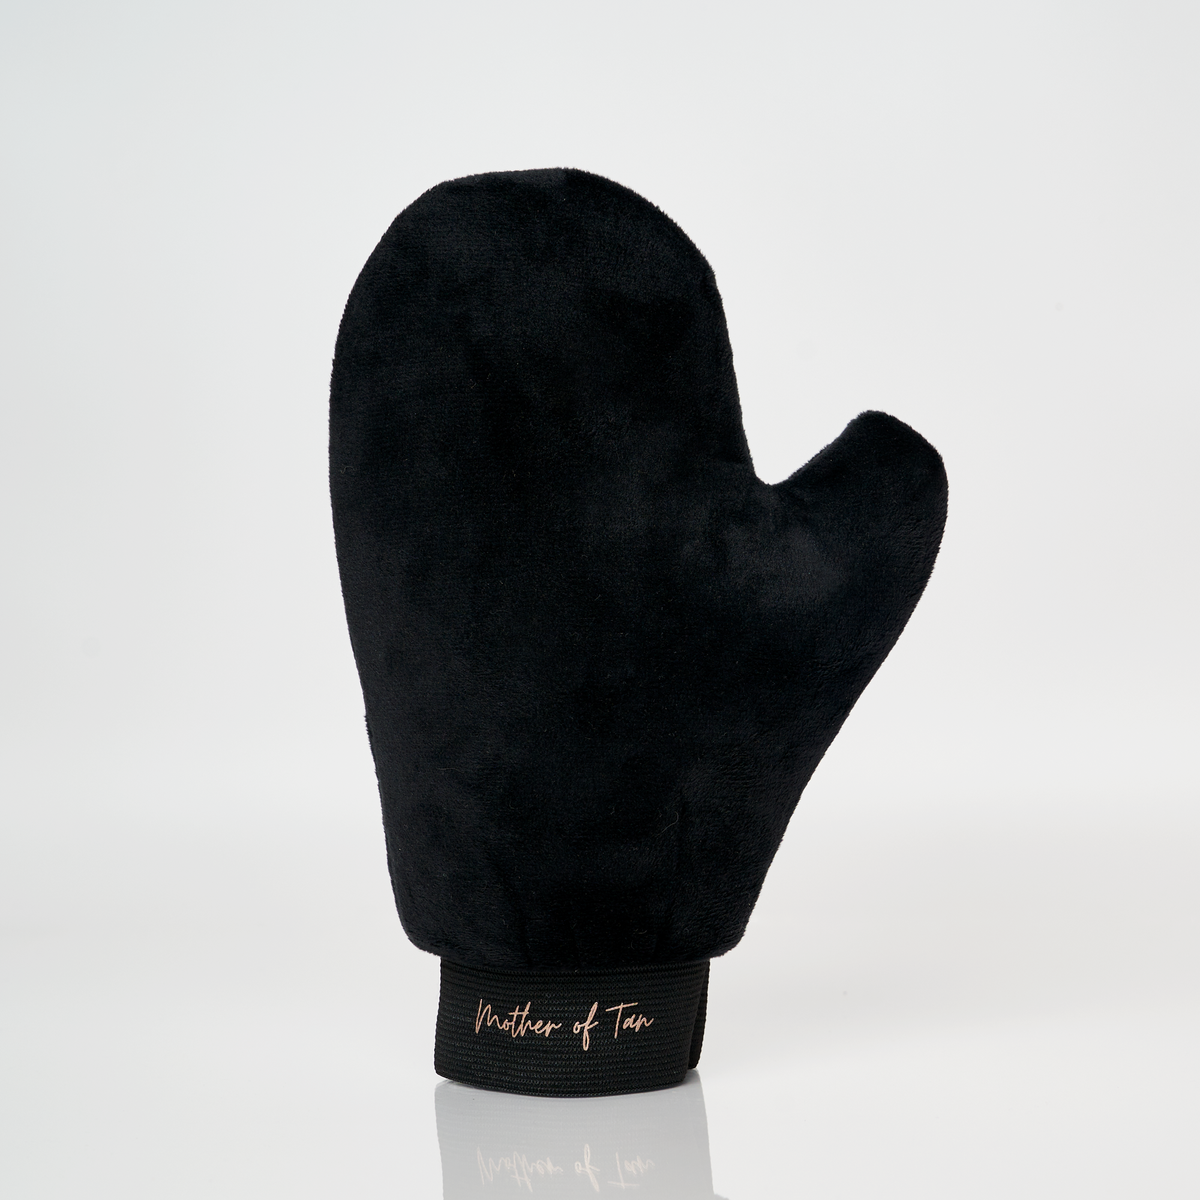 Tanning Mitt - Luxurious Velvet Tanning Glove